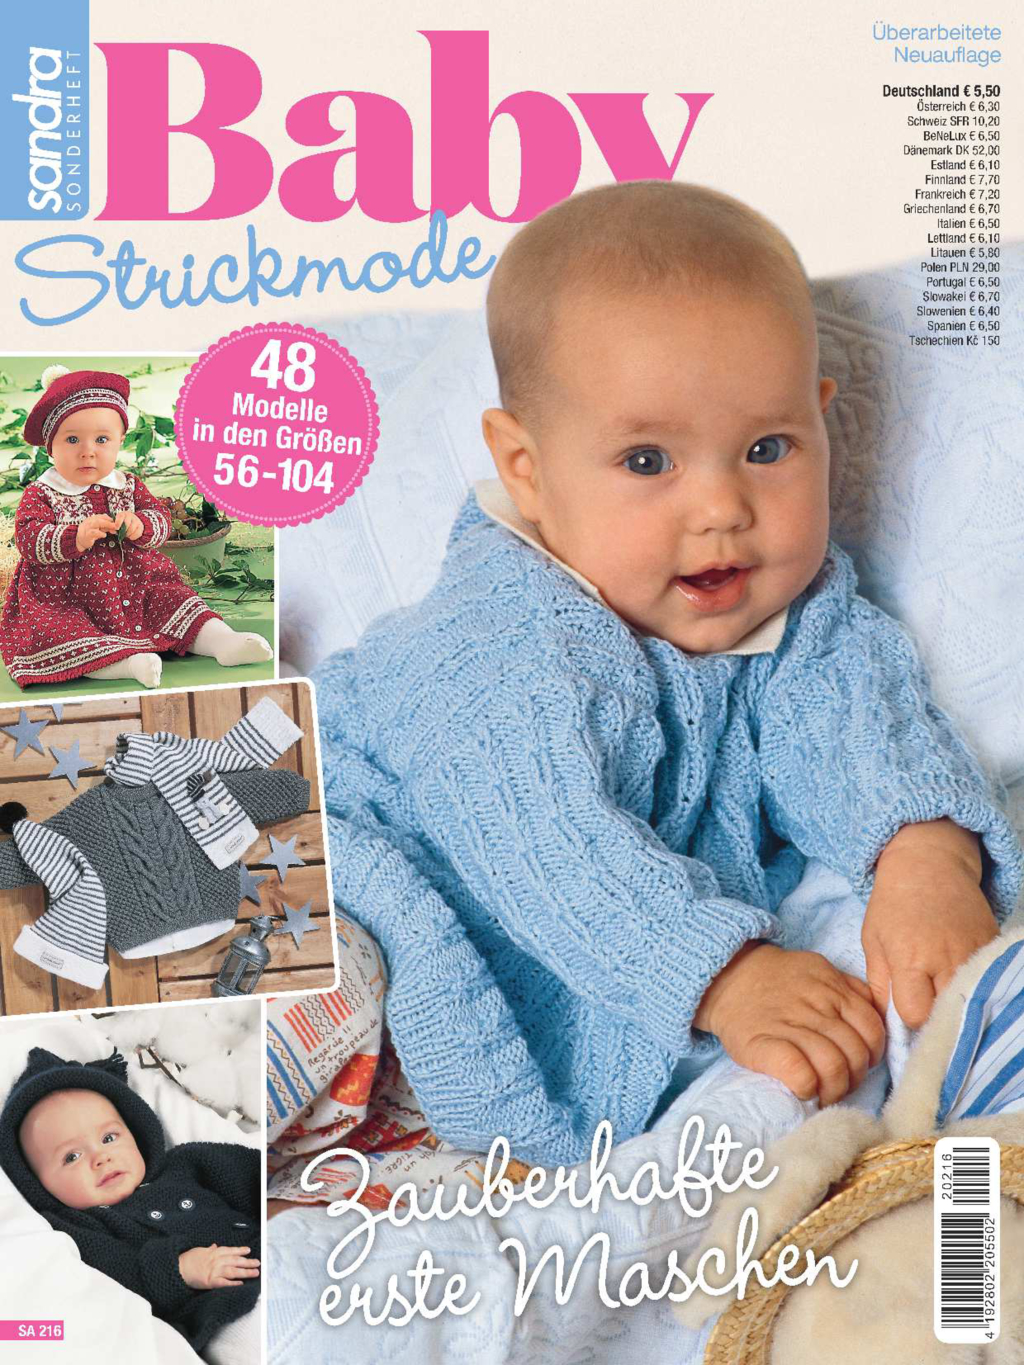 Sandra Sonderheft SA 216 - Baby Strickmode